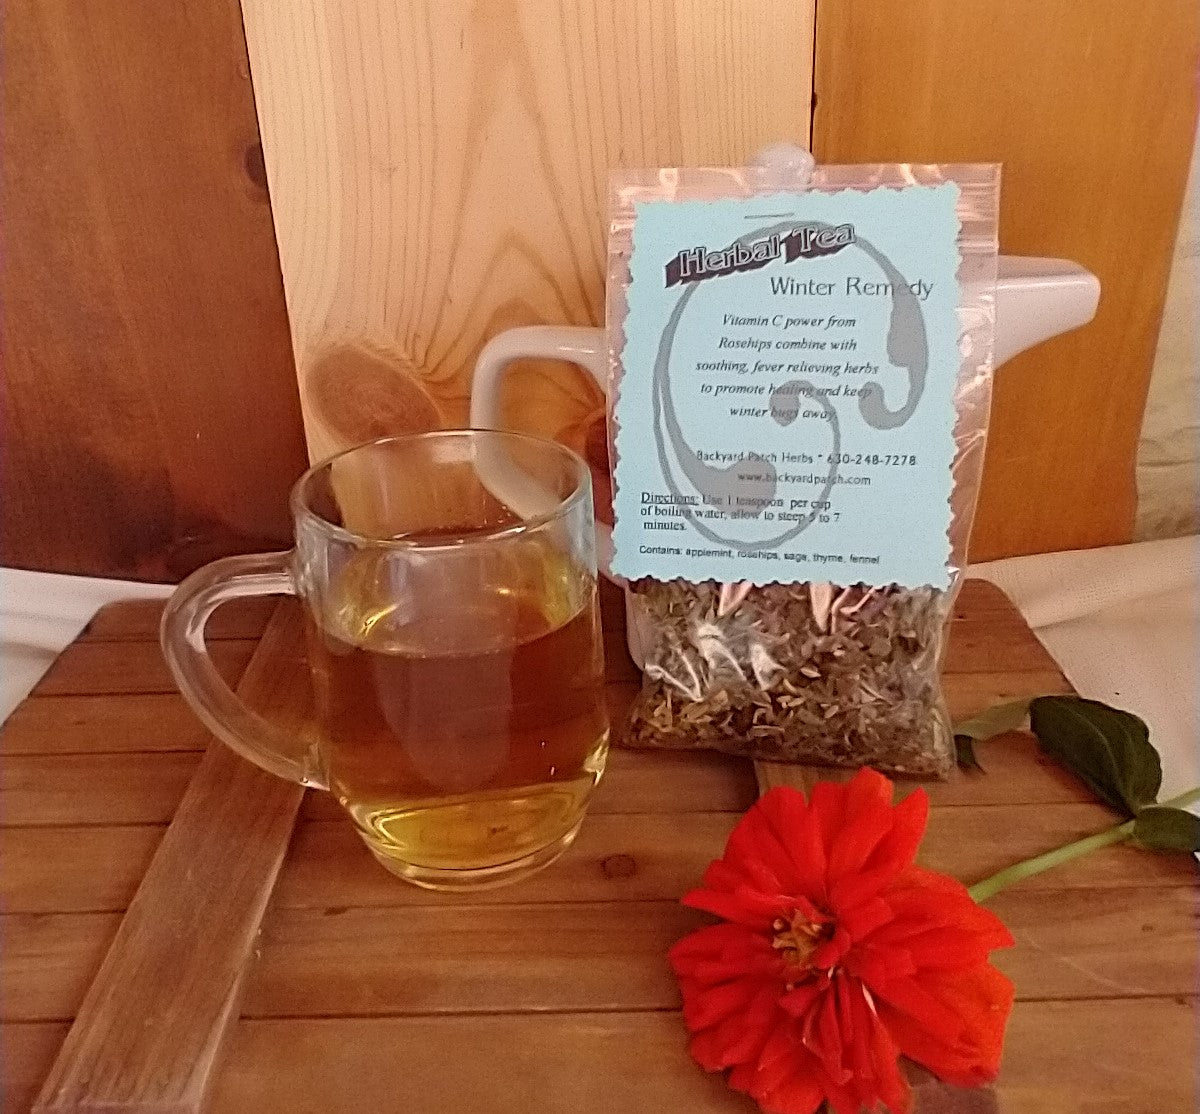 Winter Remedy Loose Herbal Tea, sage, peppermint, rose hips